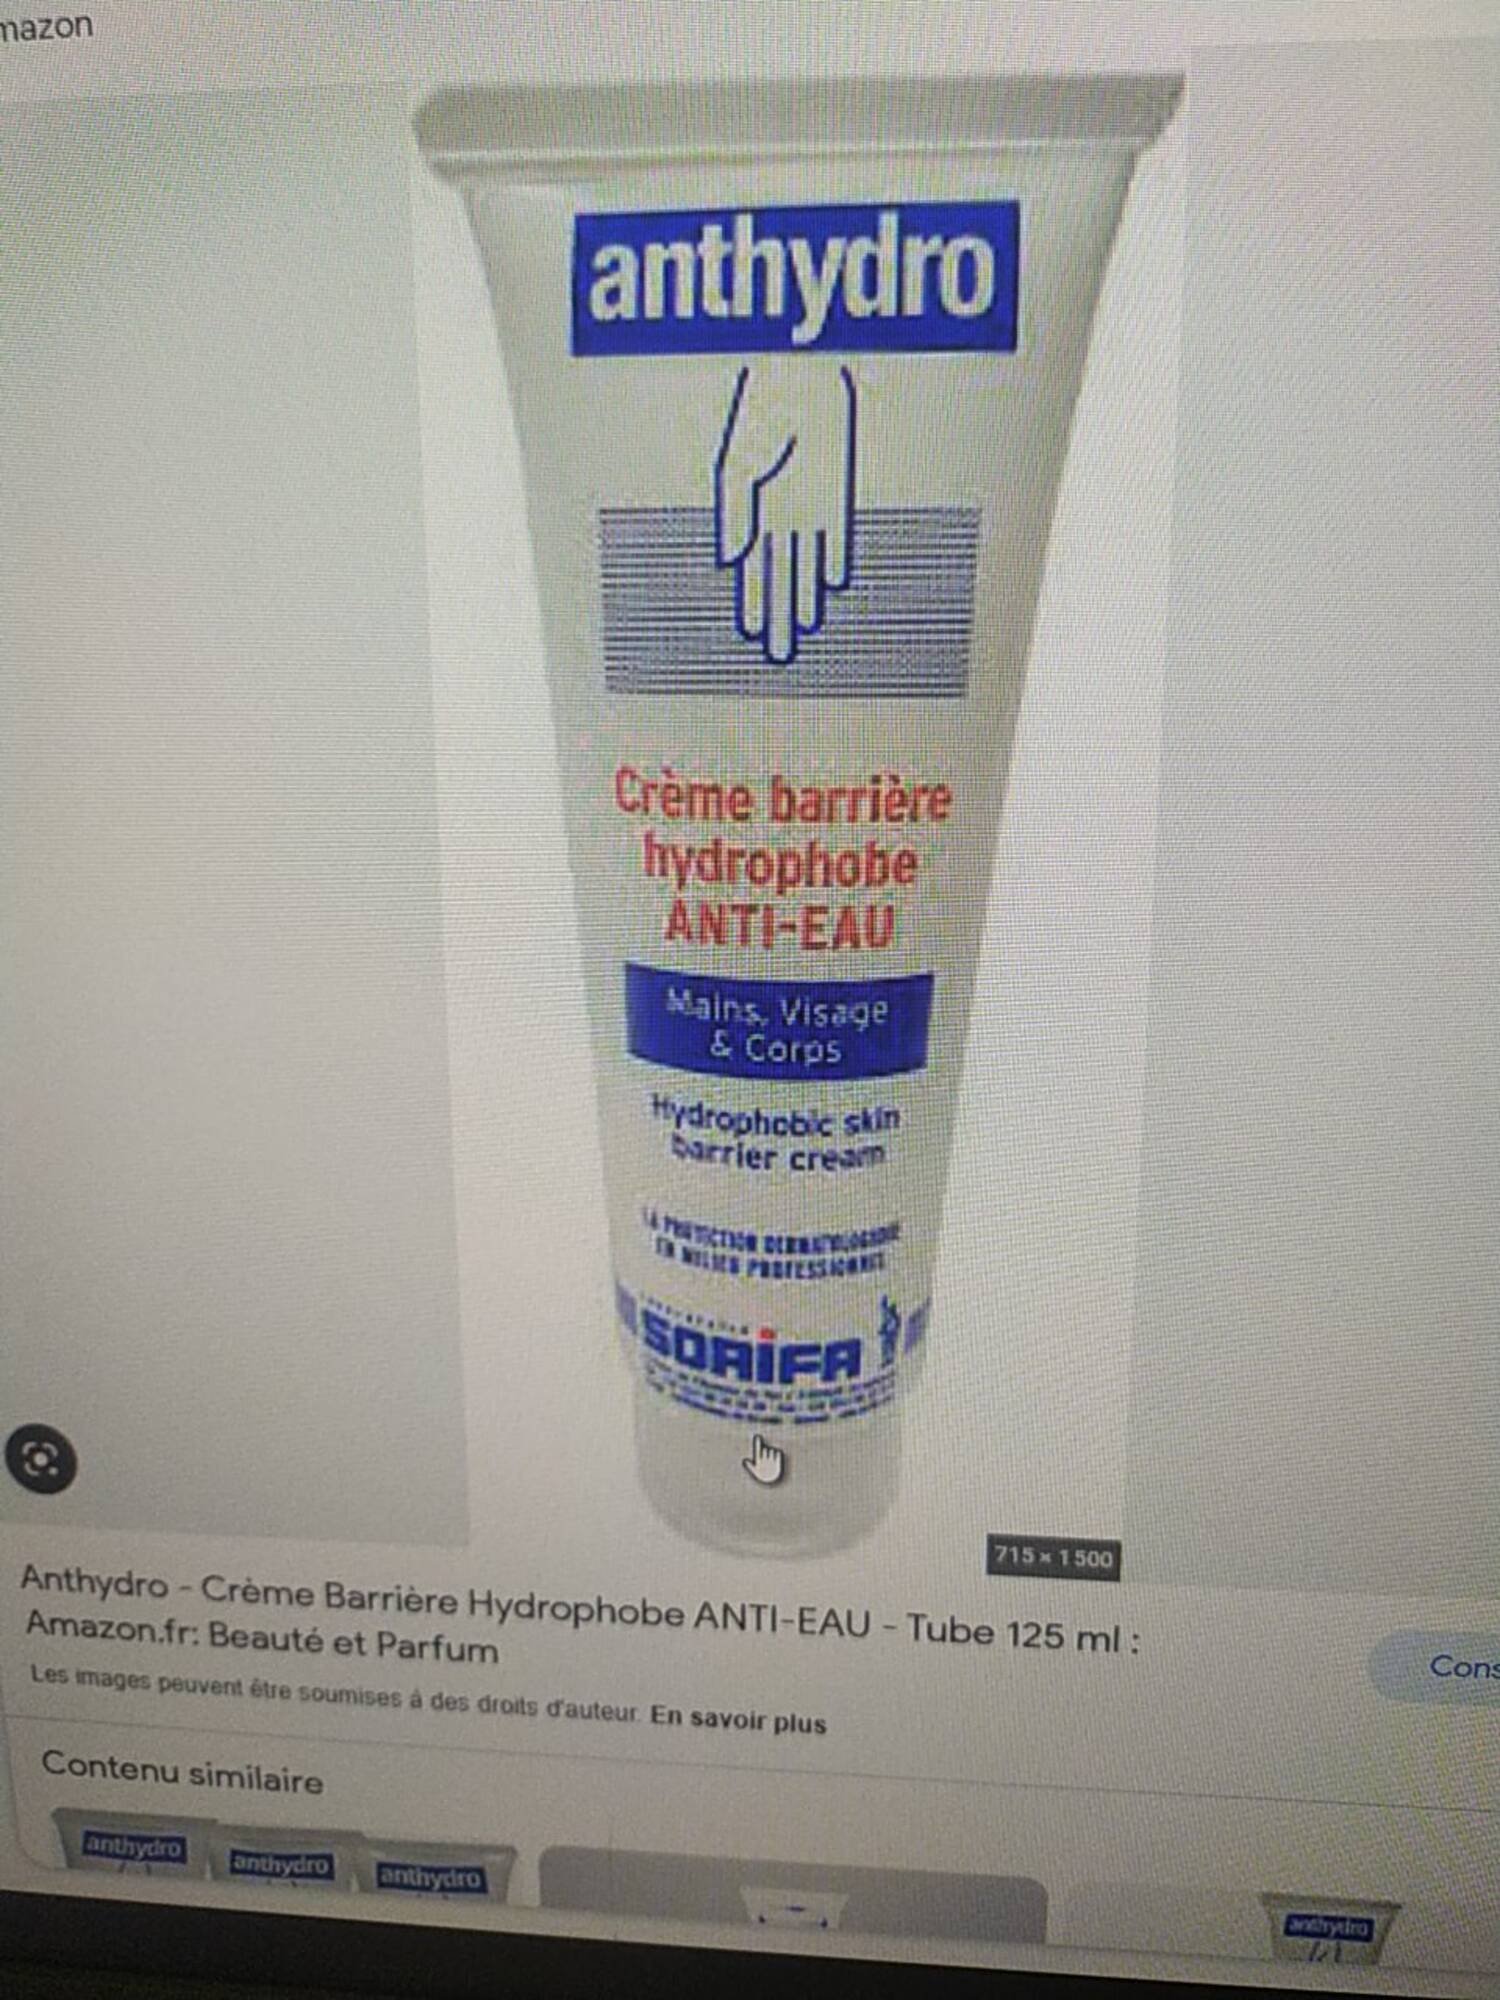 SORIFA - Anthydro - Crème barrière hydrophobe anti-eau